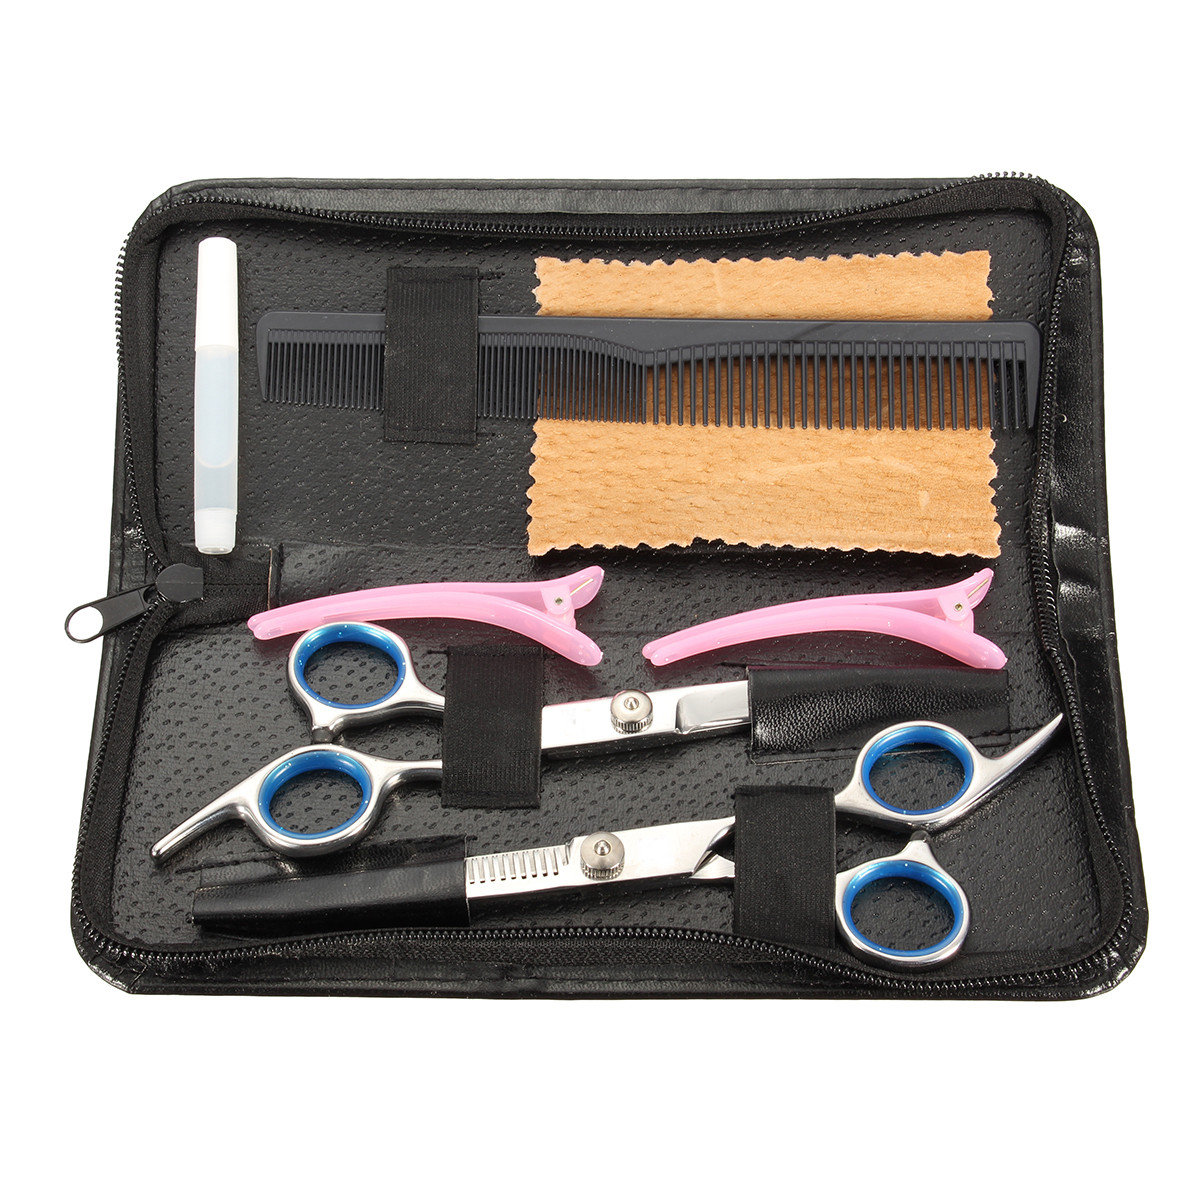 

8Pcs Salon Barber Hairdressing Set Hair Cutting Thinning Scissors Shears Clips Grooming Kit